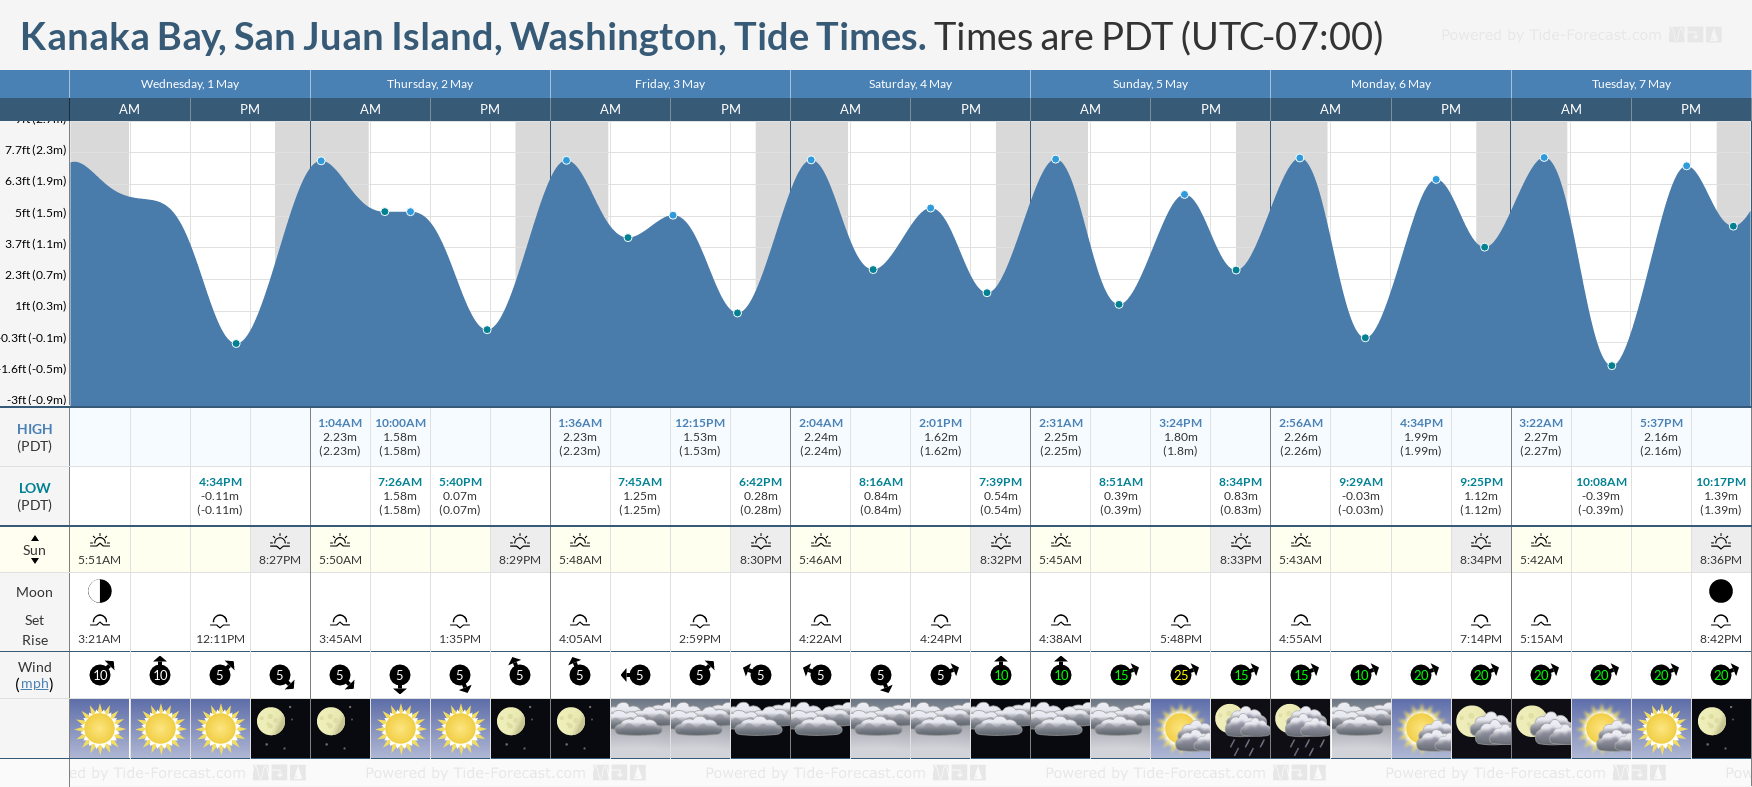 Kanaka Bay, San Juan Island, Washington Tide Chart including high and low tide tide times for the next 7 days